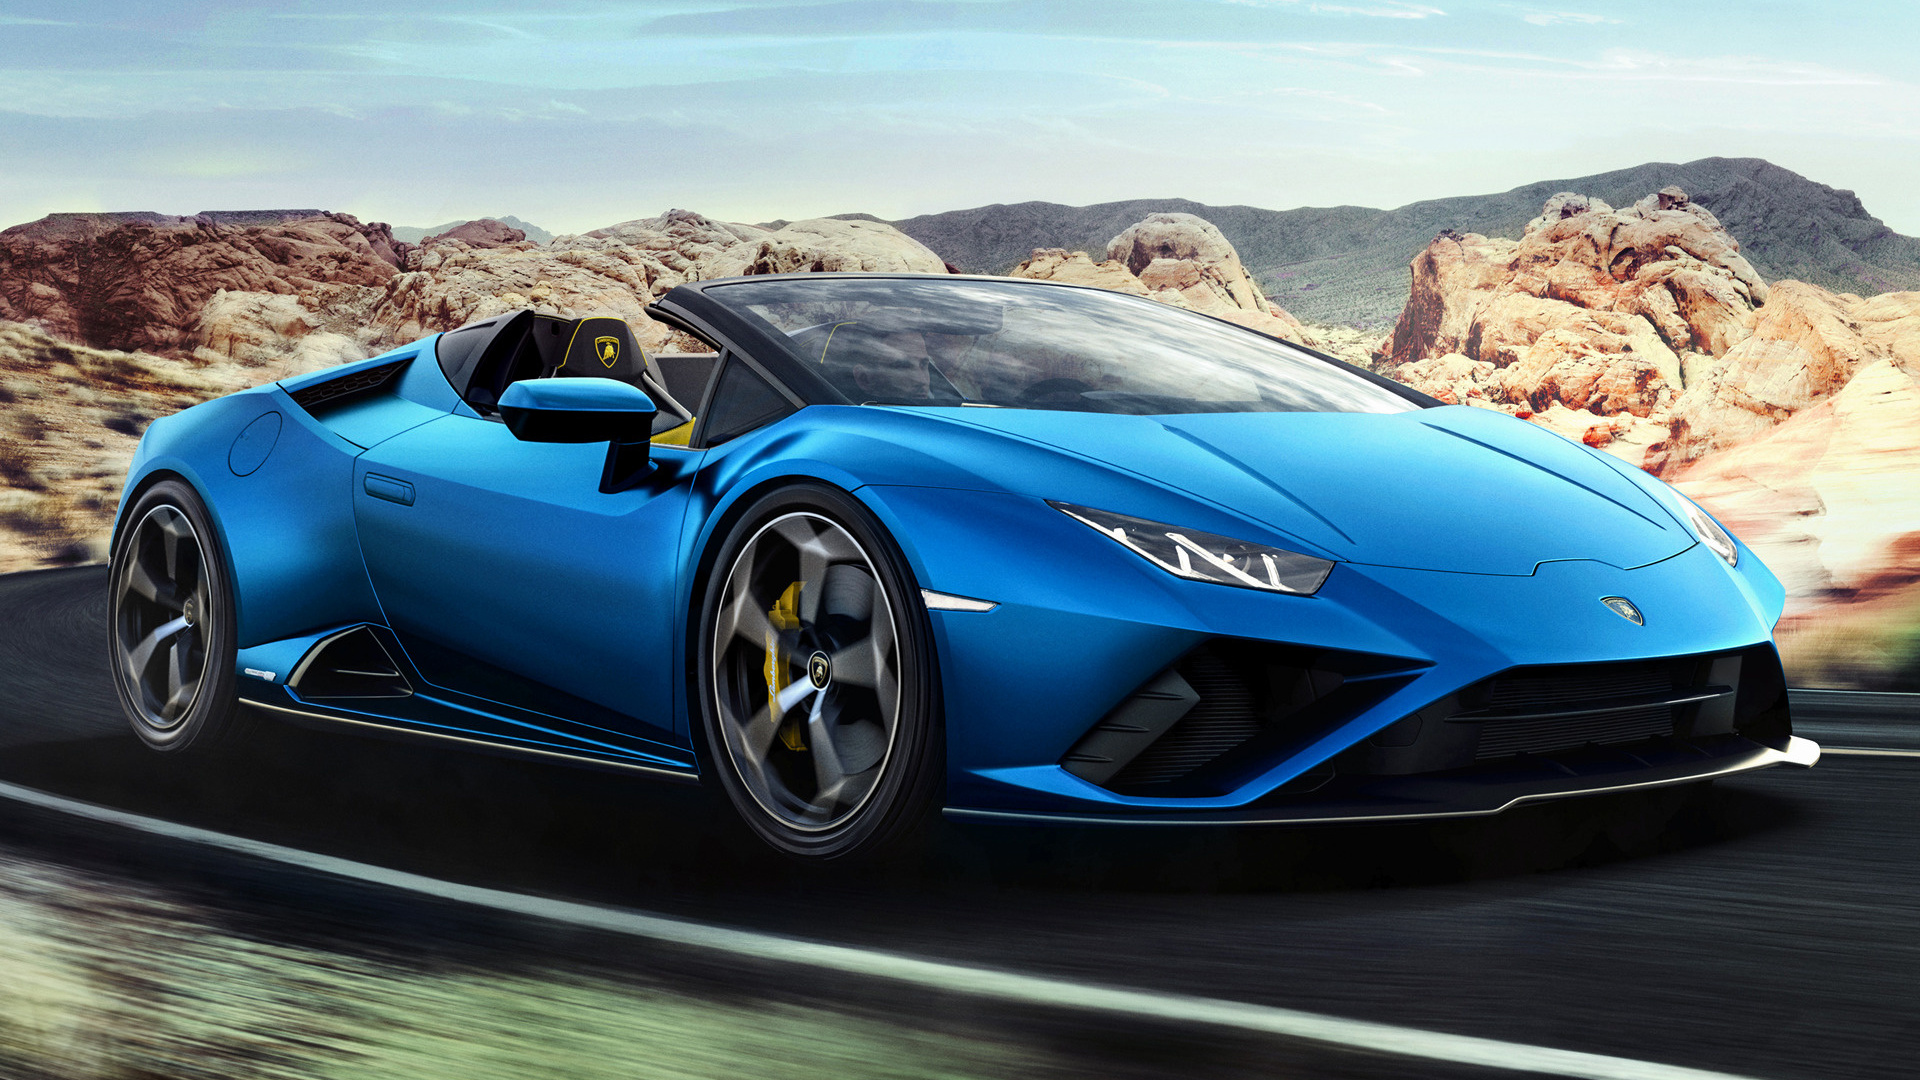 2020 Lamborghini Huracan Evo RWD Spyder - Fonds d'écran et ...